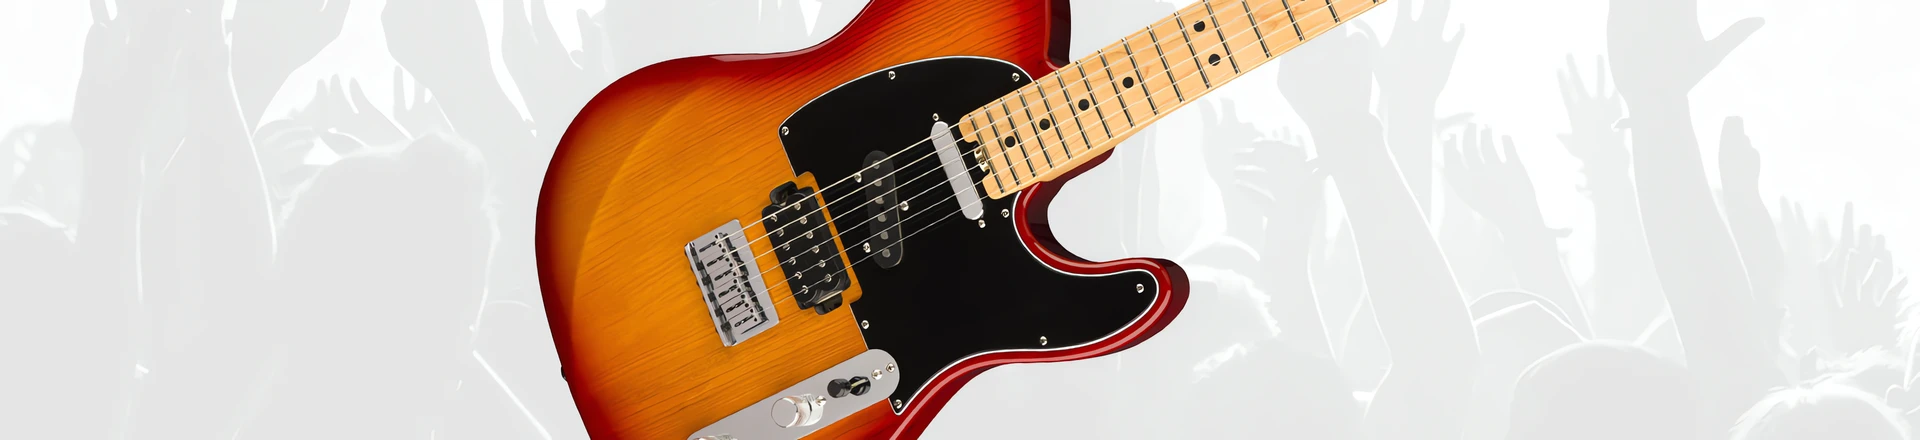 Nowość w katalogu Fender  - American Elite Tele